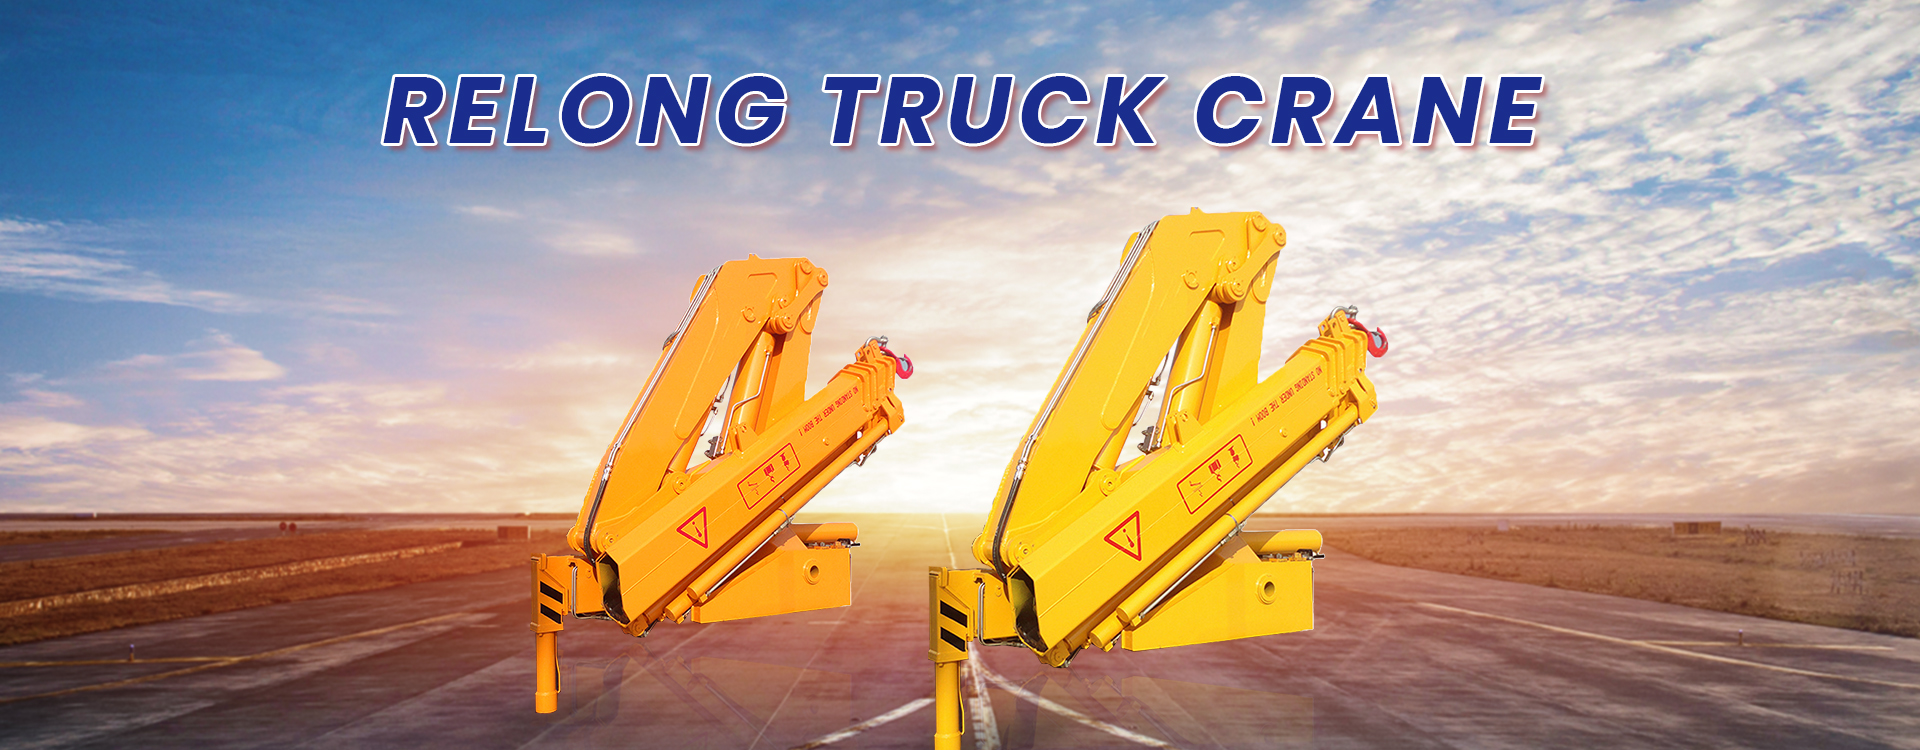 Pickup Truck Crane, Grapple Crane, Forklift - Relong